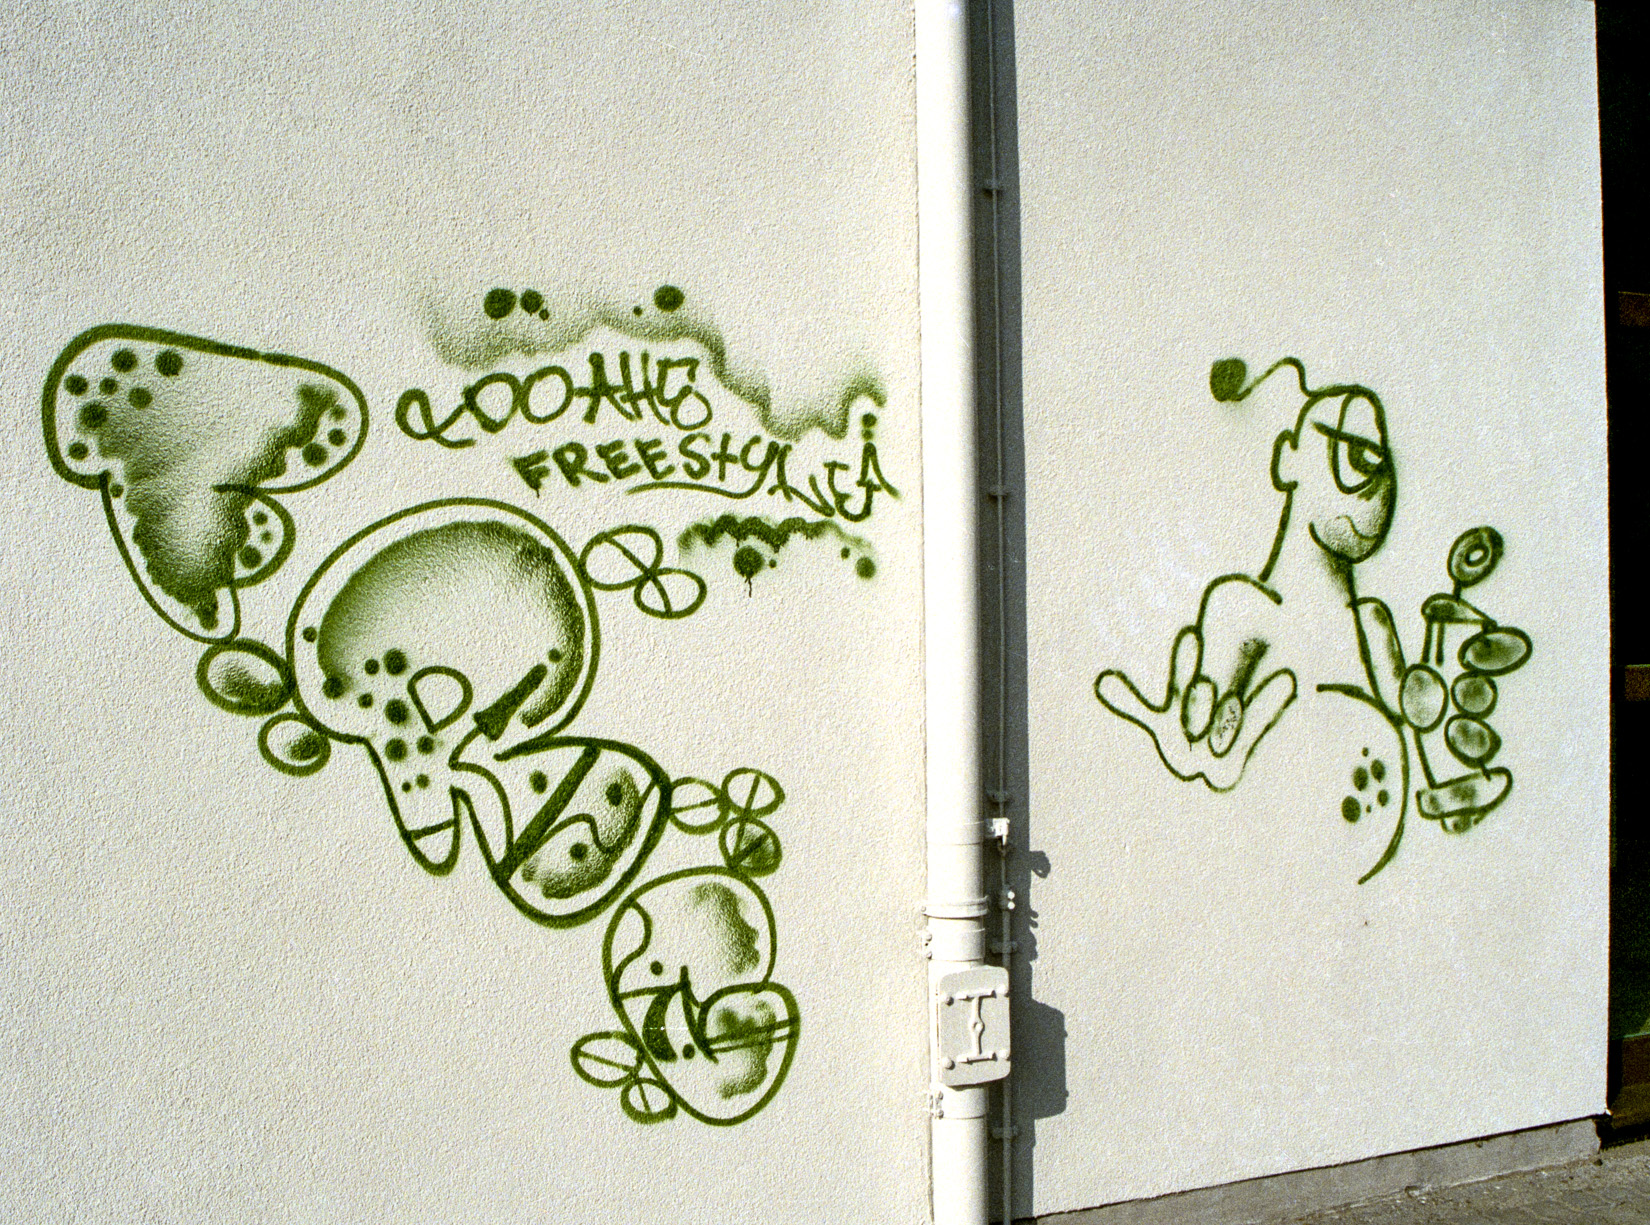 Frankfurt_Graffiti_1988_1989_H88_FRC (9 von 25)